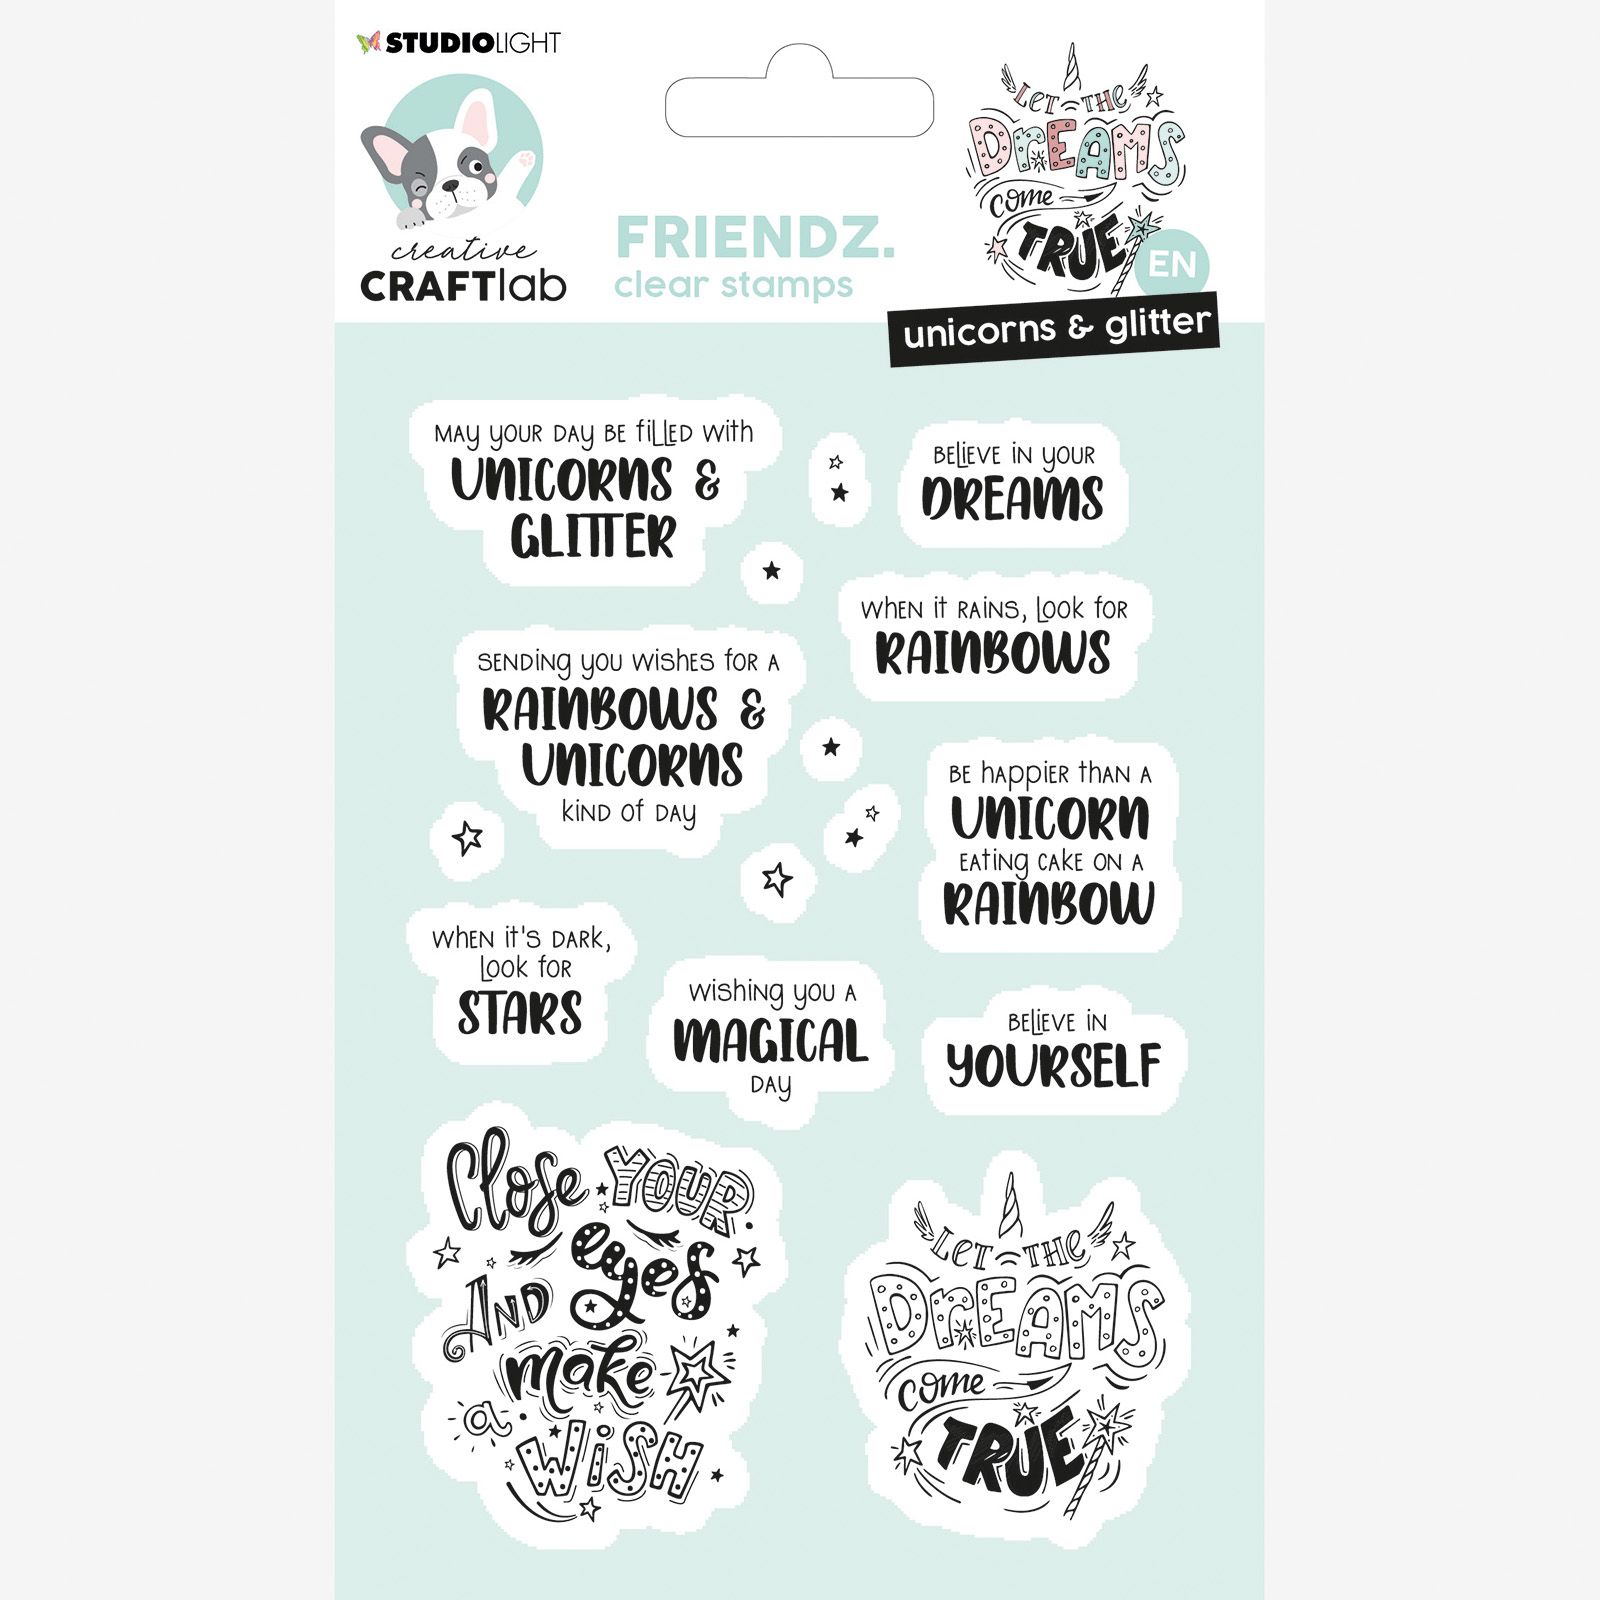 Creative Craftlab • Friendz Clear Stamp Unicorns & Glitter